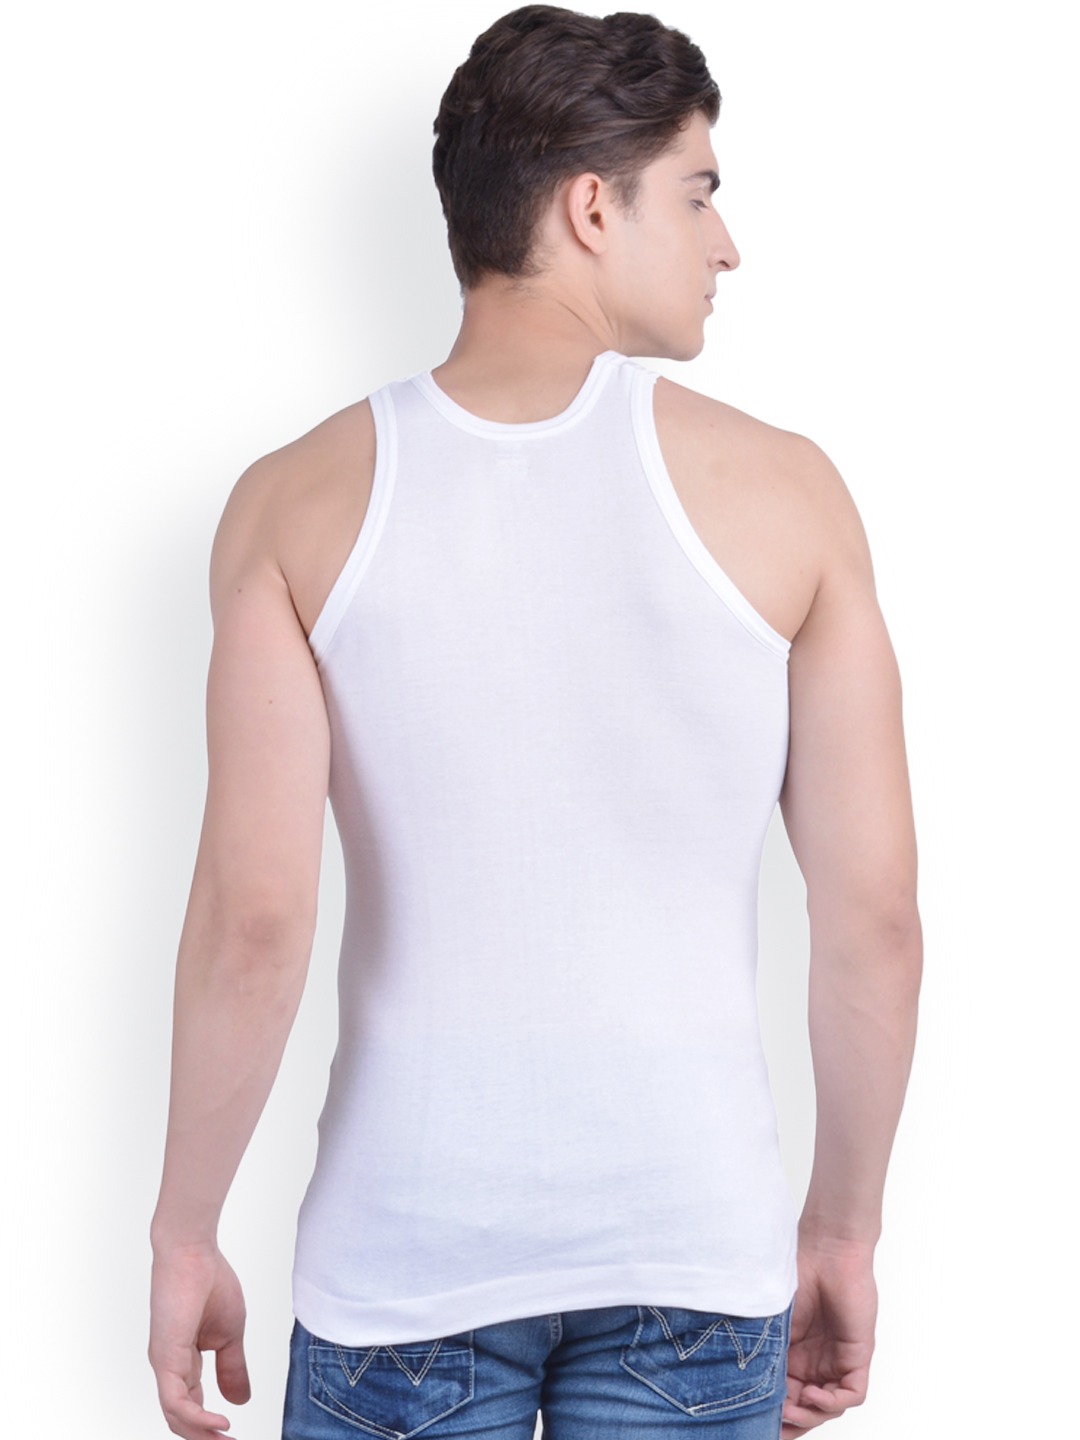 Clothing Innerwear Vests | Dollar Bigboss Pack of 5 White Innerwear Vests MDVE-05-PO5 - HQ77060